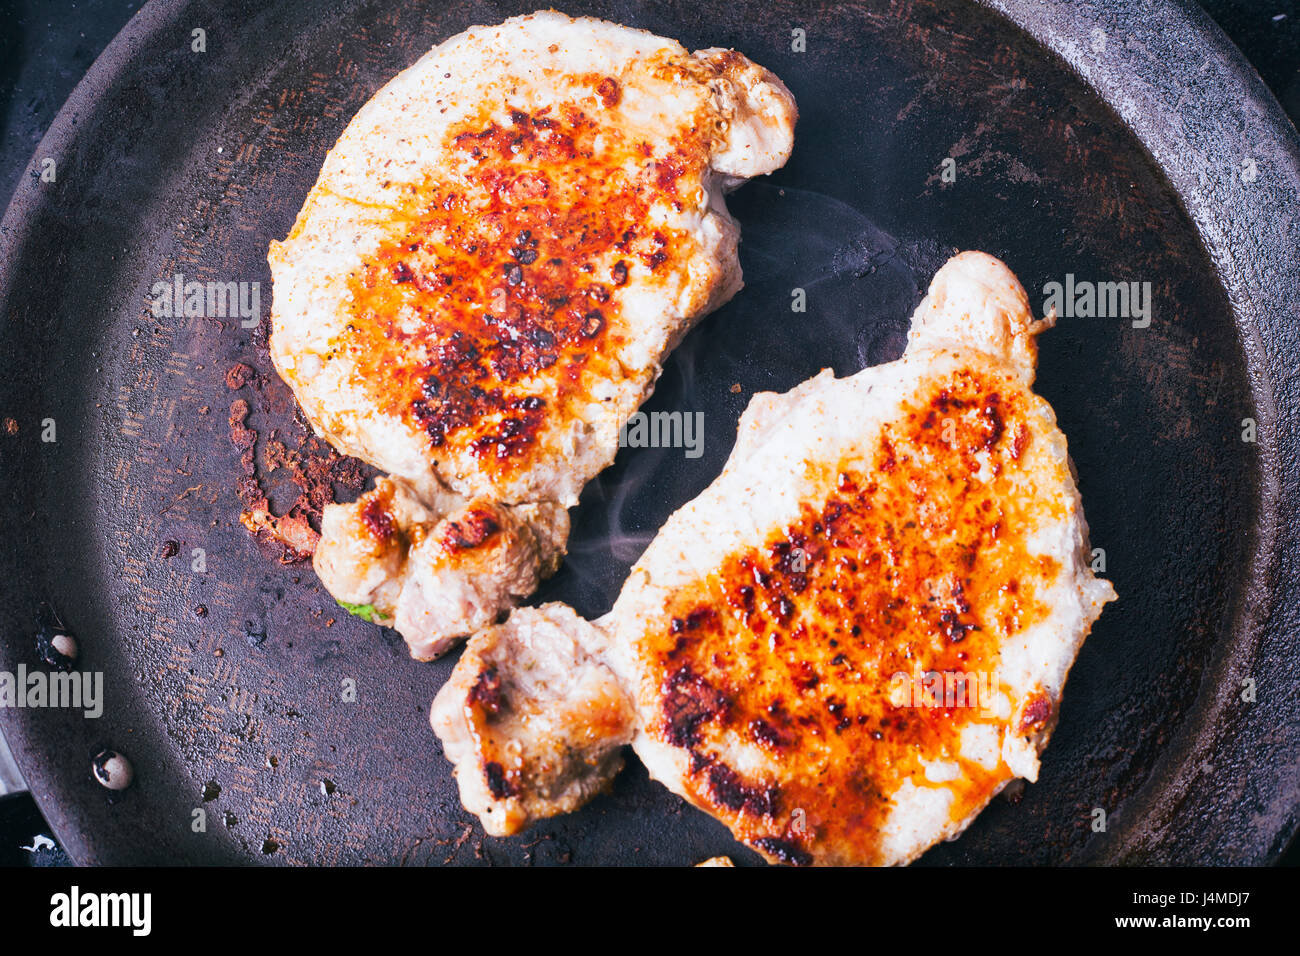 Pork chops searing in pan Stock Photo